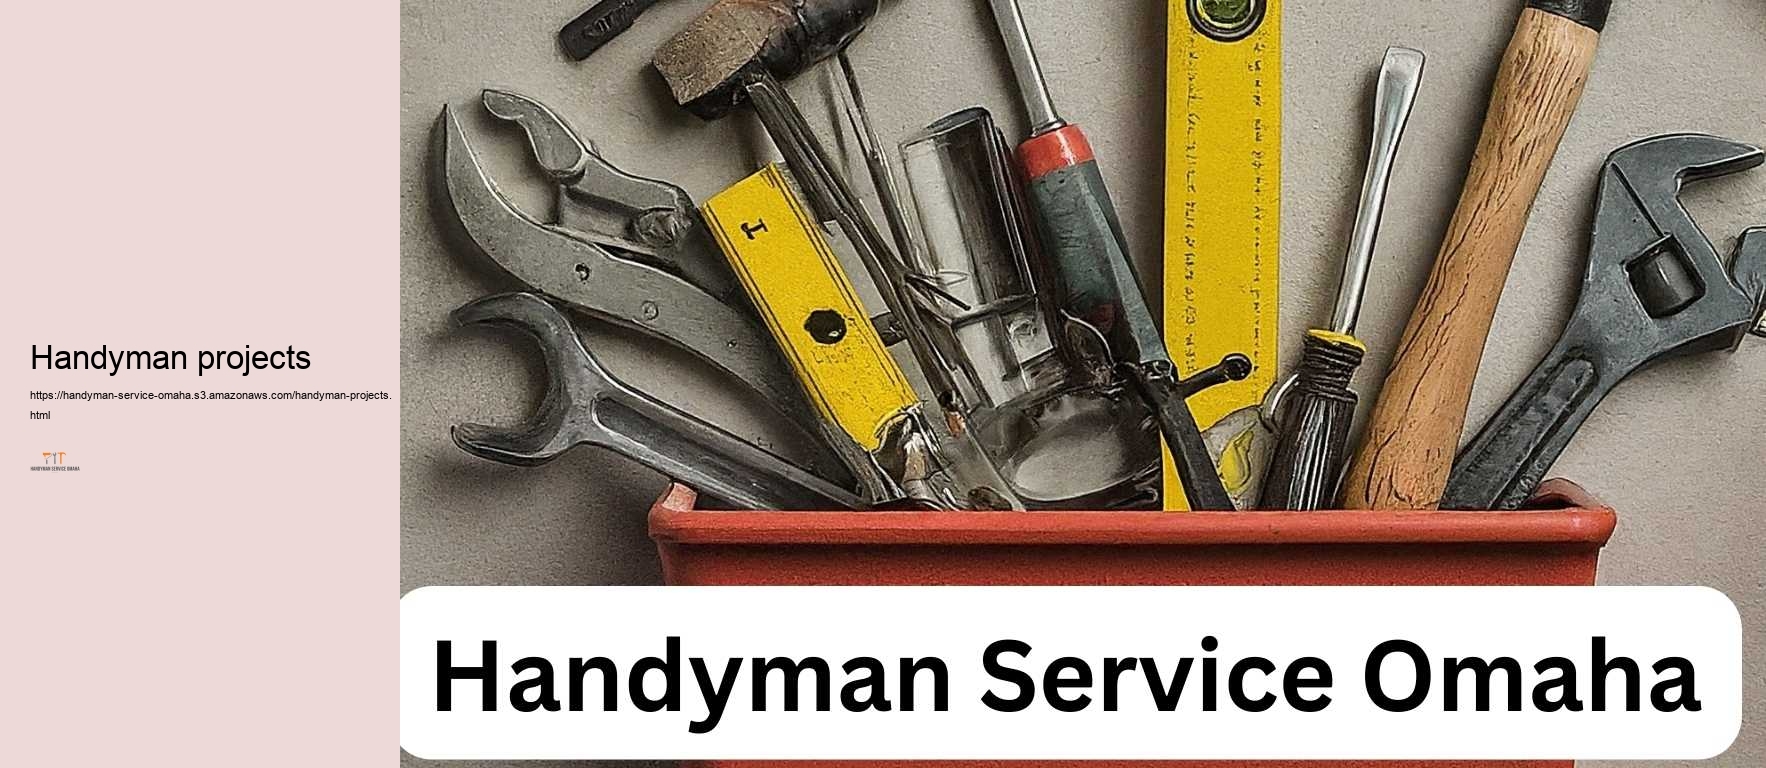 Handyman projects